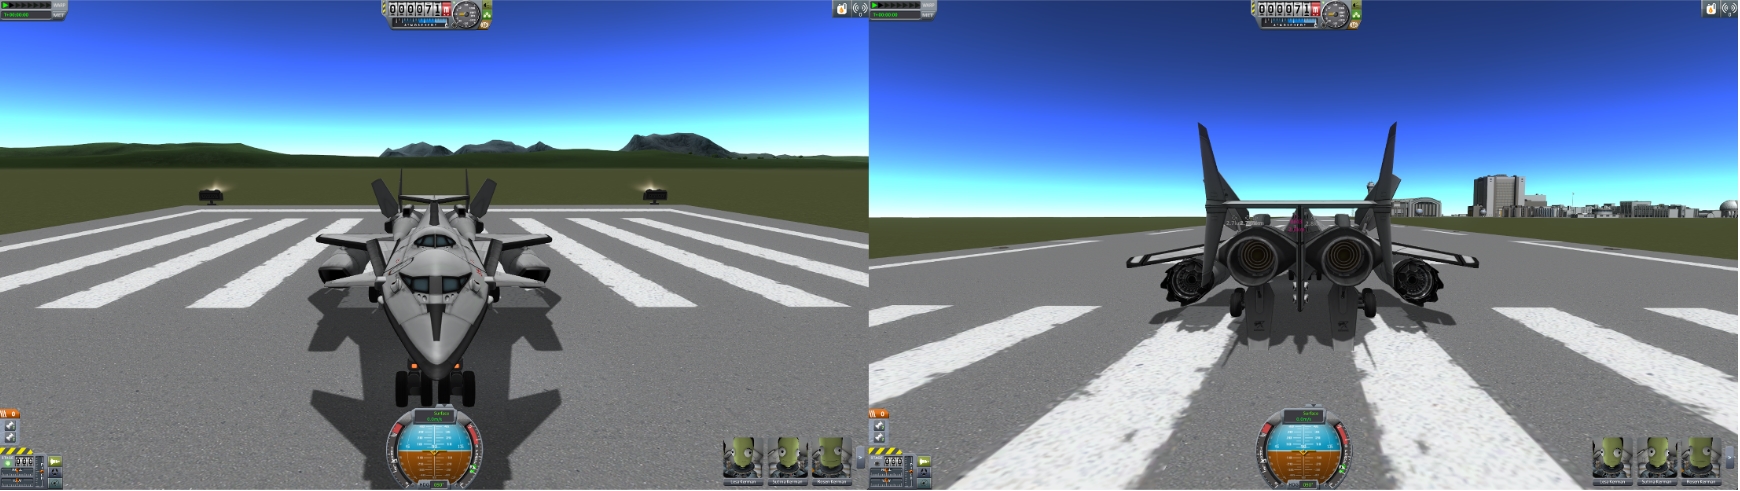 kerbal space program controls landing gear